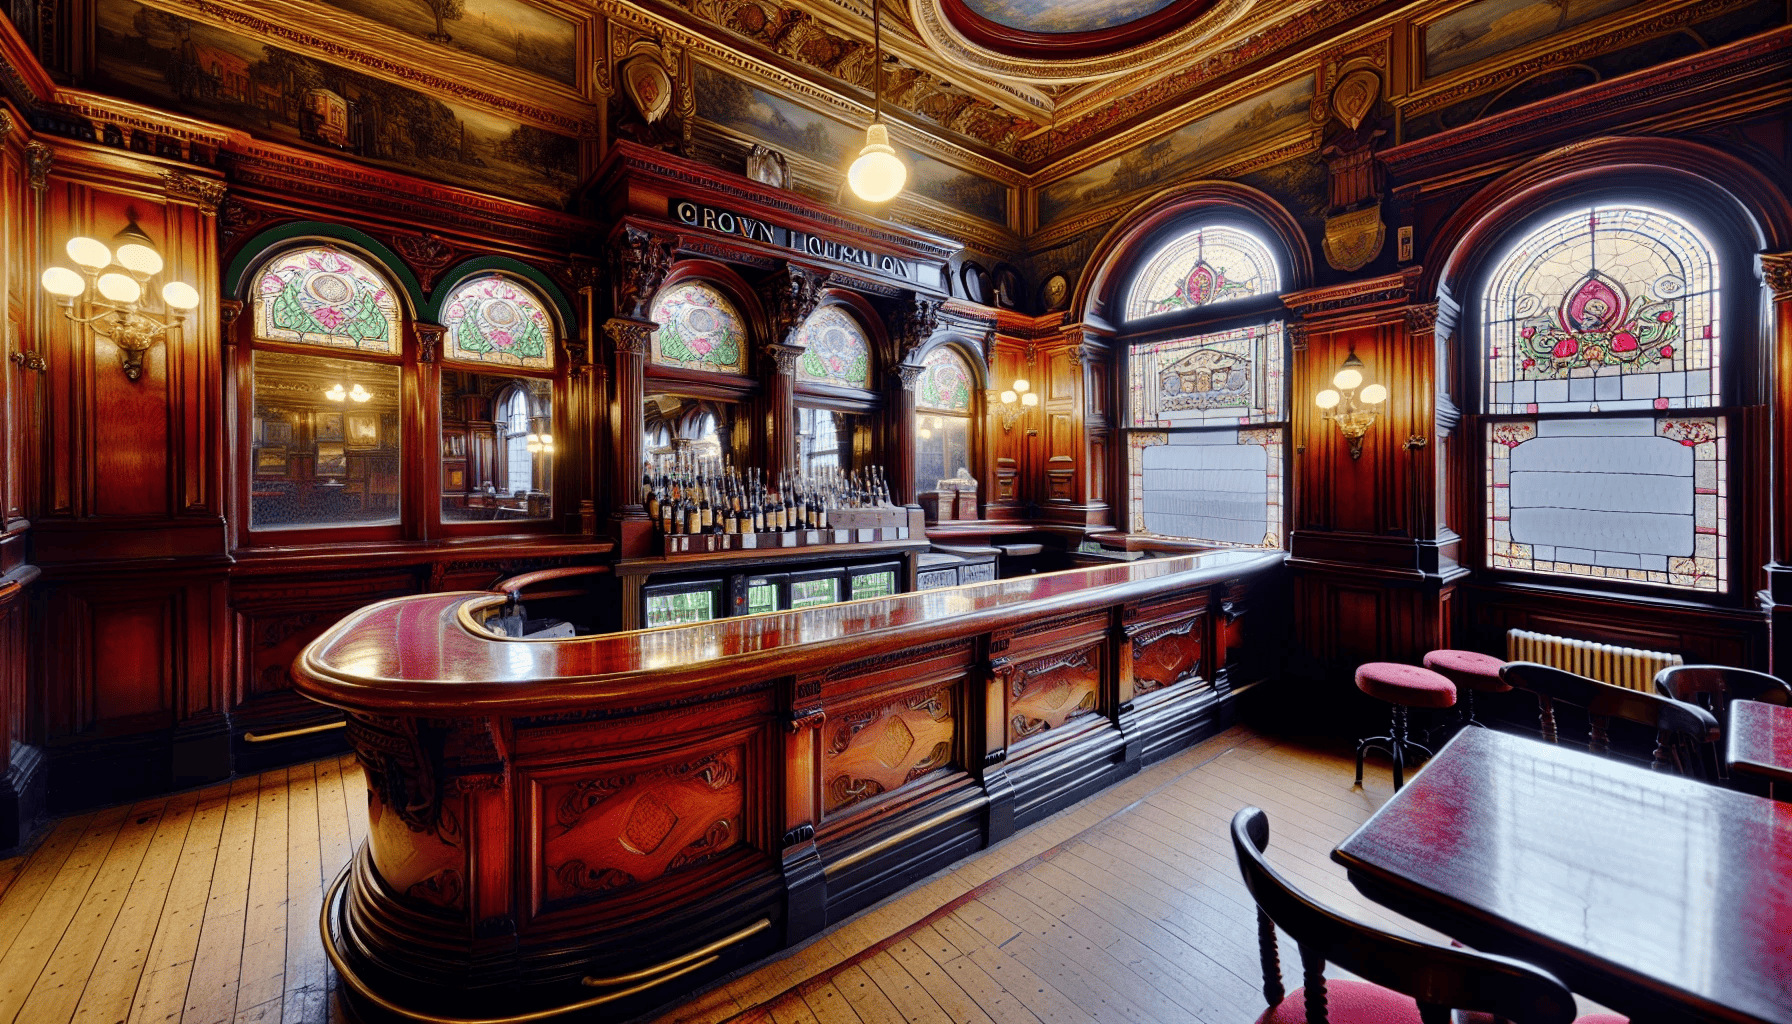 Ornate interior of the Crown Liquor Saloon